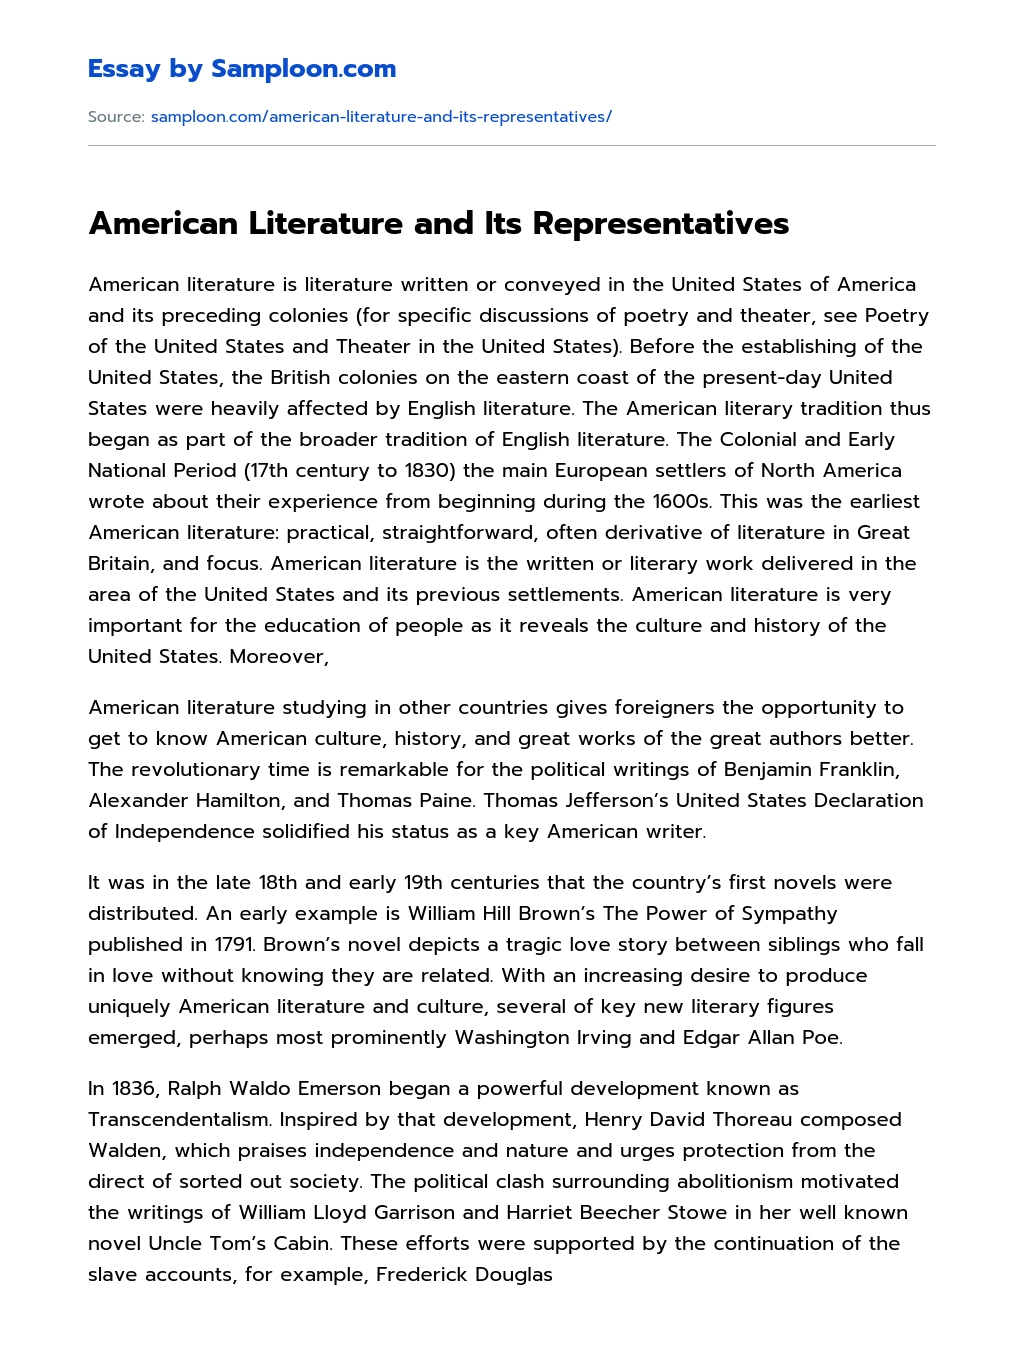 American Literature and Its Representatives Research Paper essay